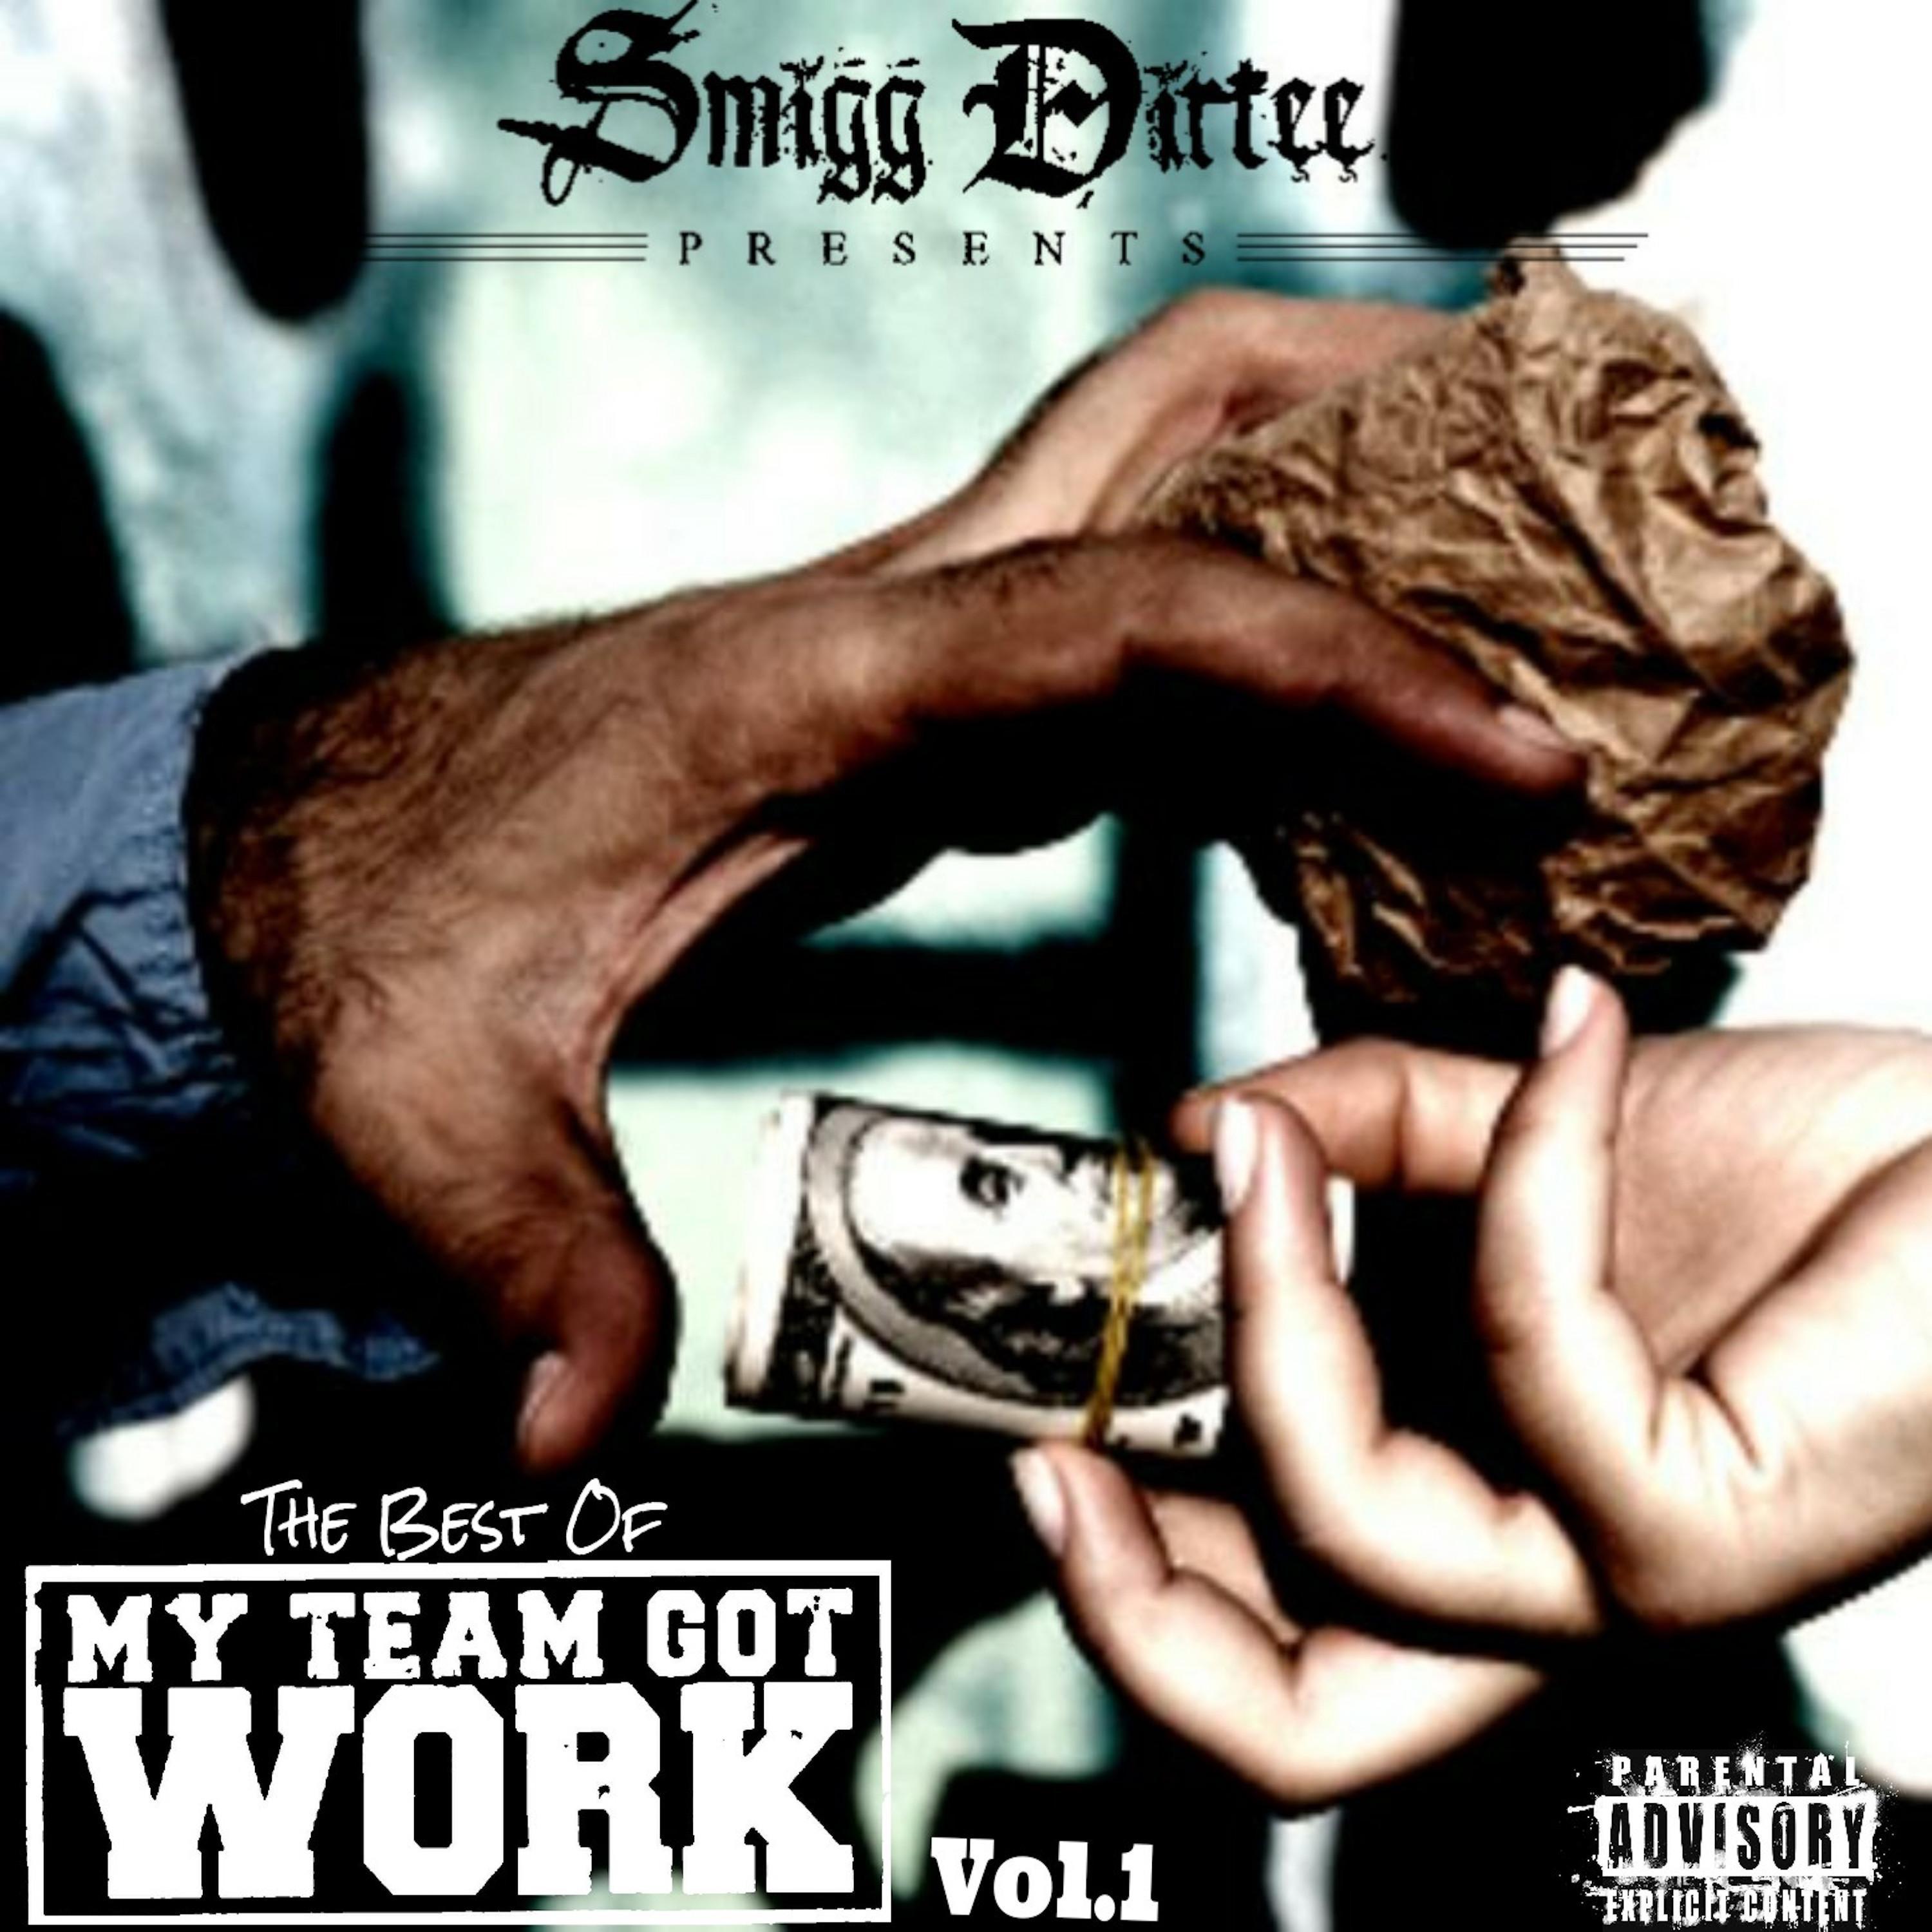 Smigg Dirtee Presents the Best of My Team Got Work Vol. 1